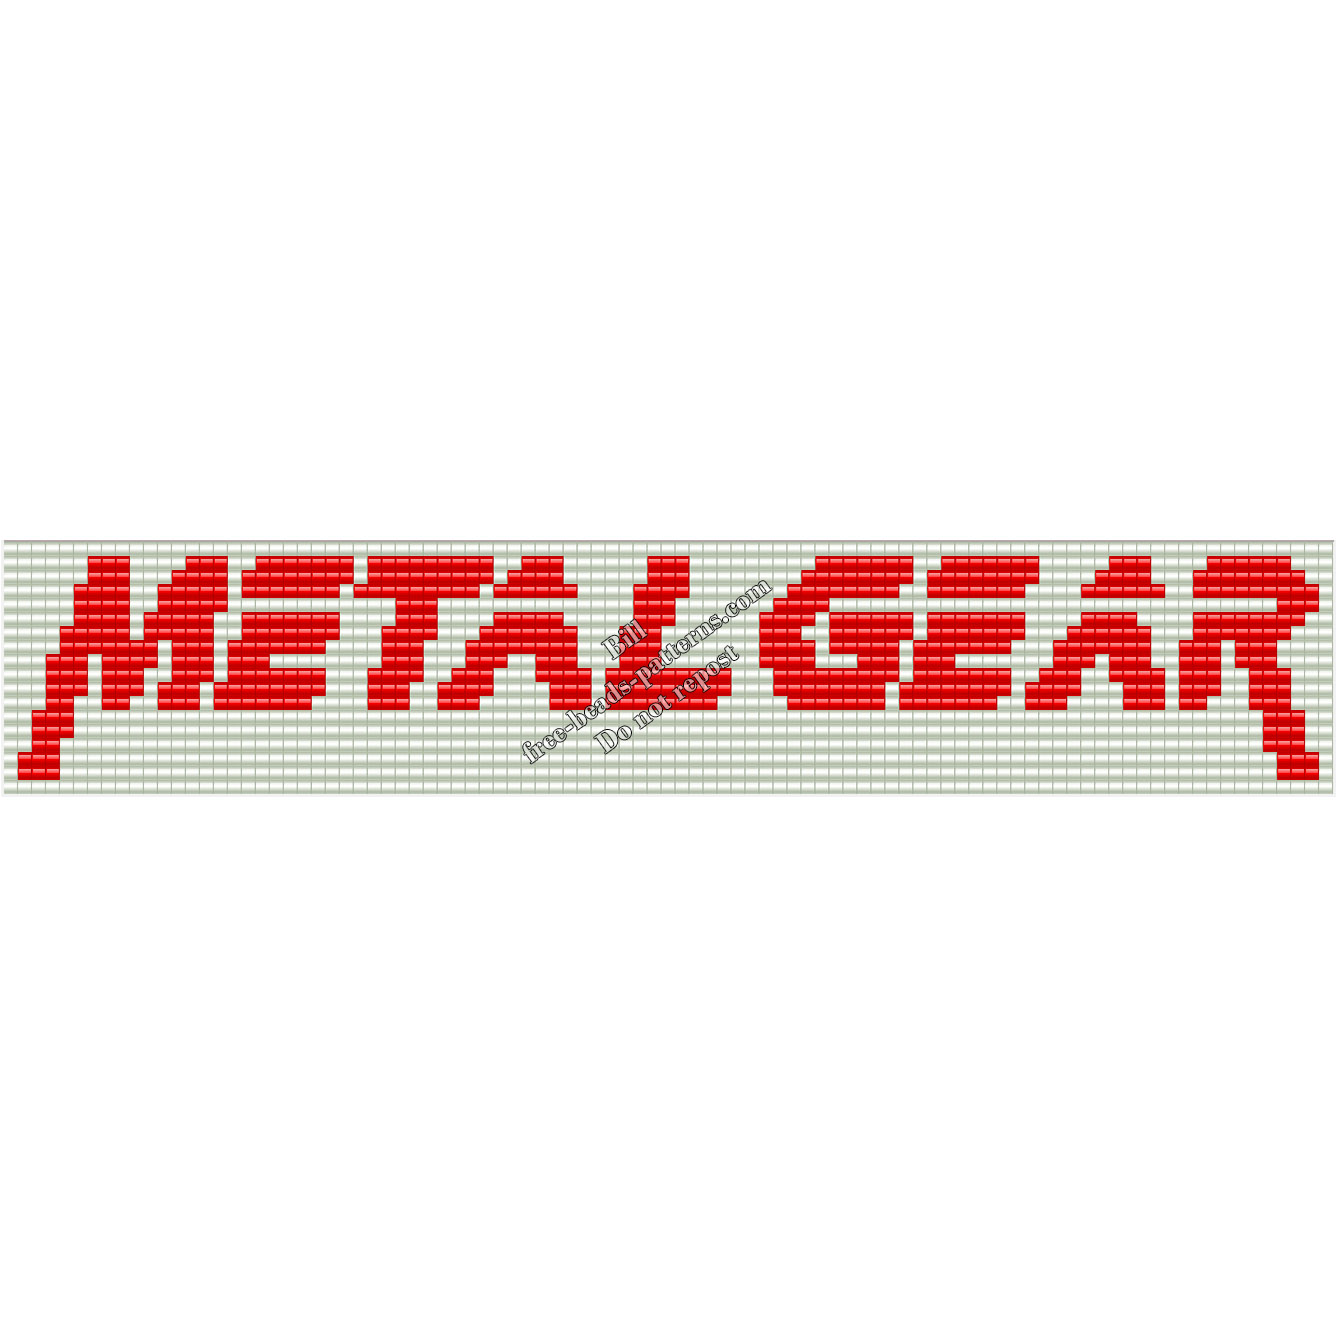 Metal Gear Solid 1 perler beads hama beads iron beads logo (1)